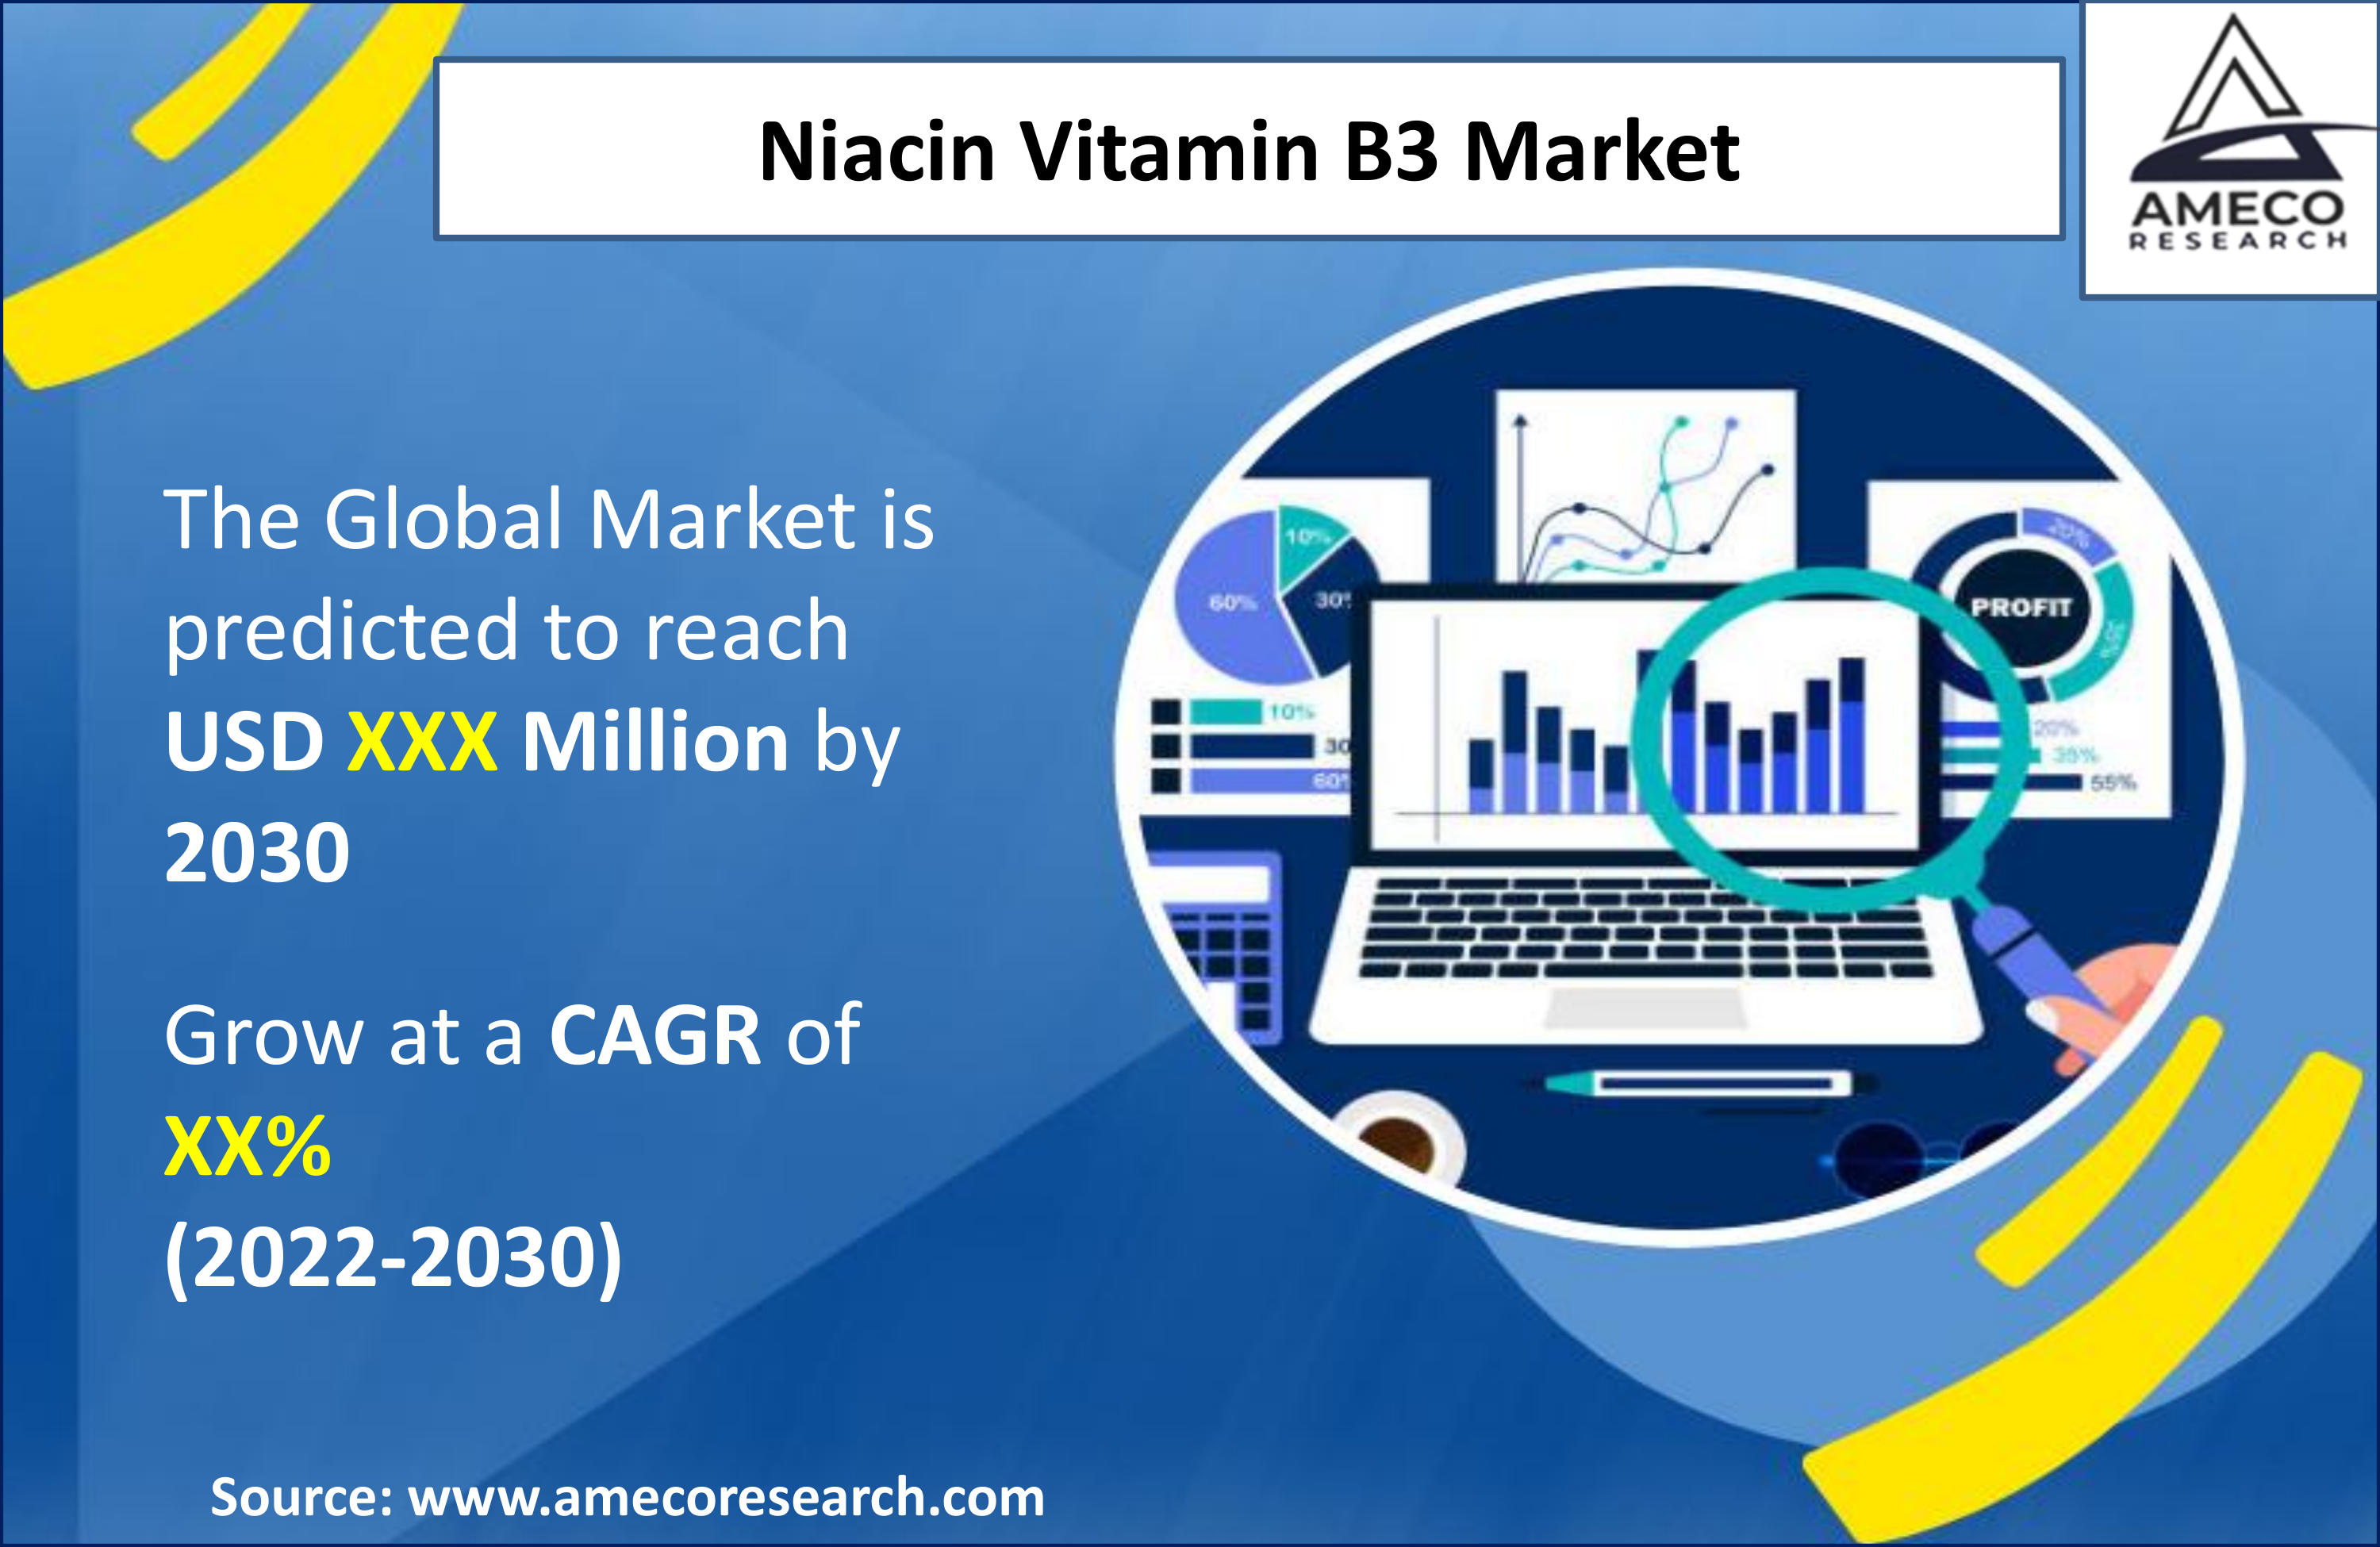 Niacin Vitamin B3 Market